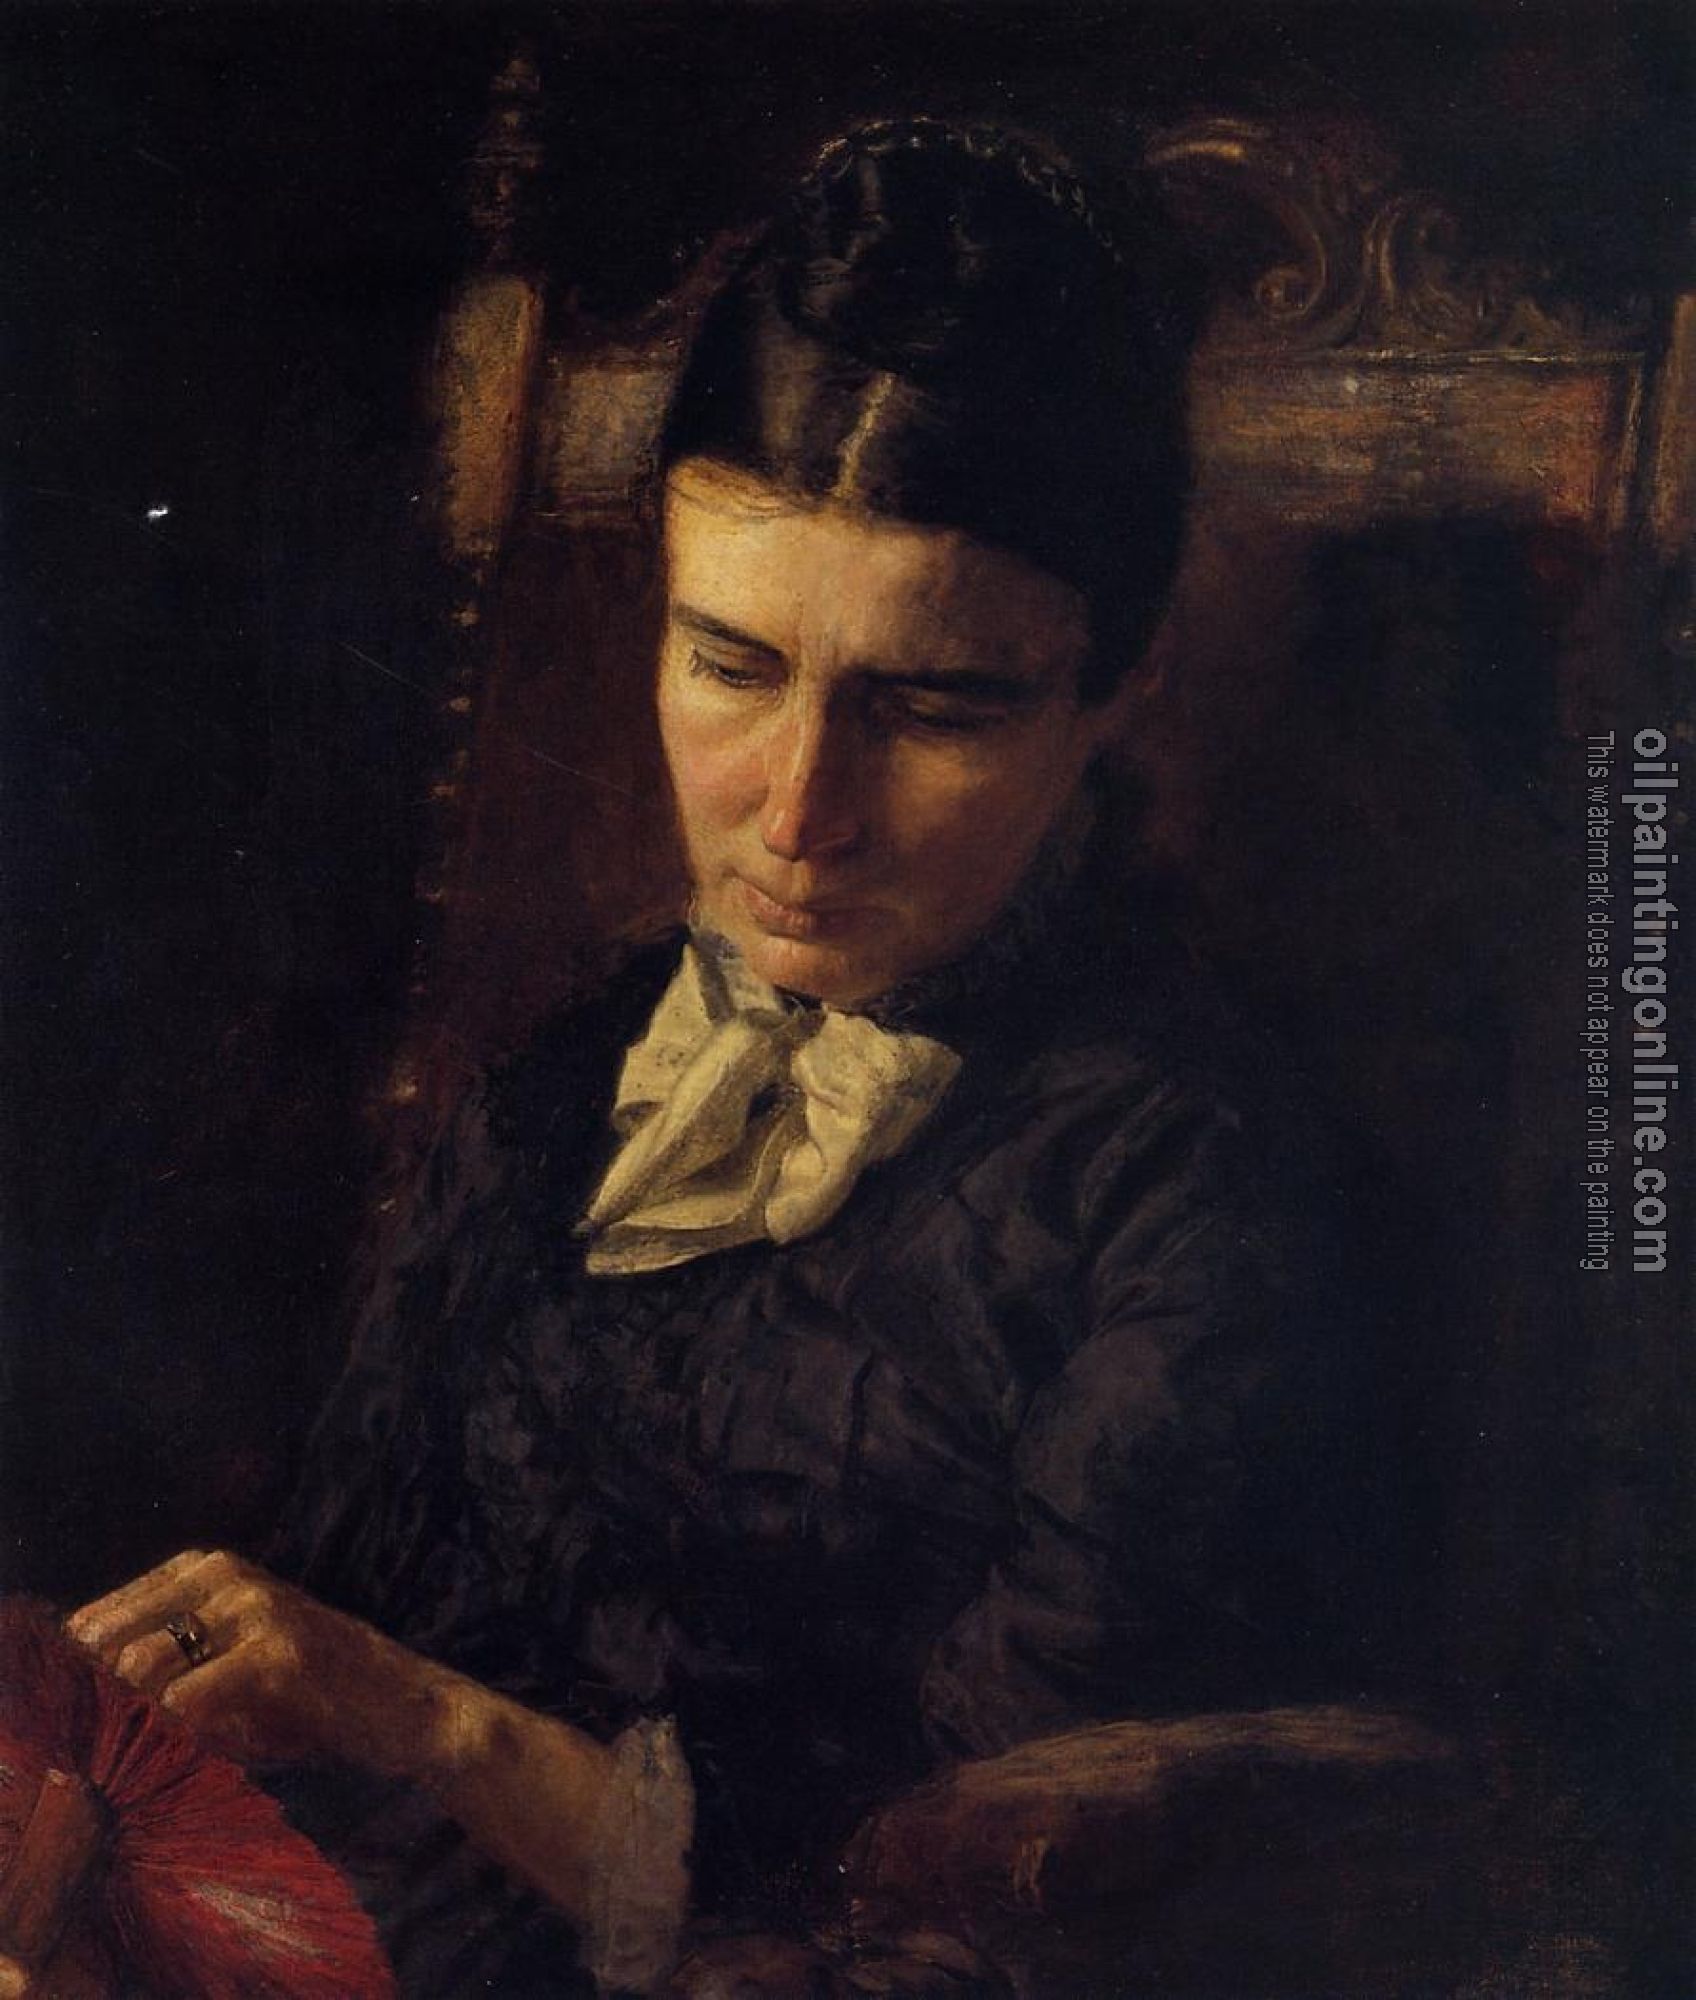 Eakins, Thomas - Portrait of Sarah Ward Brinton